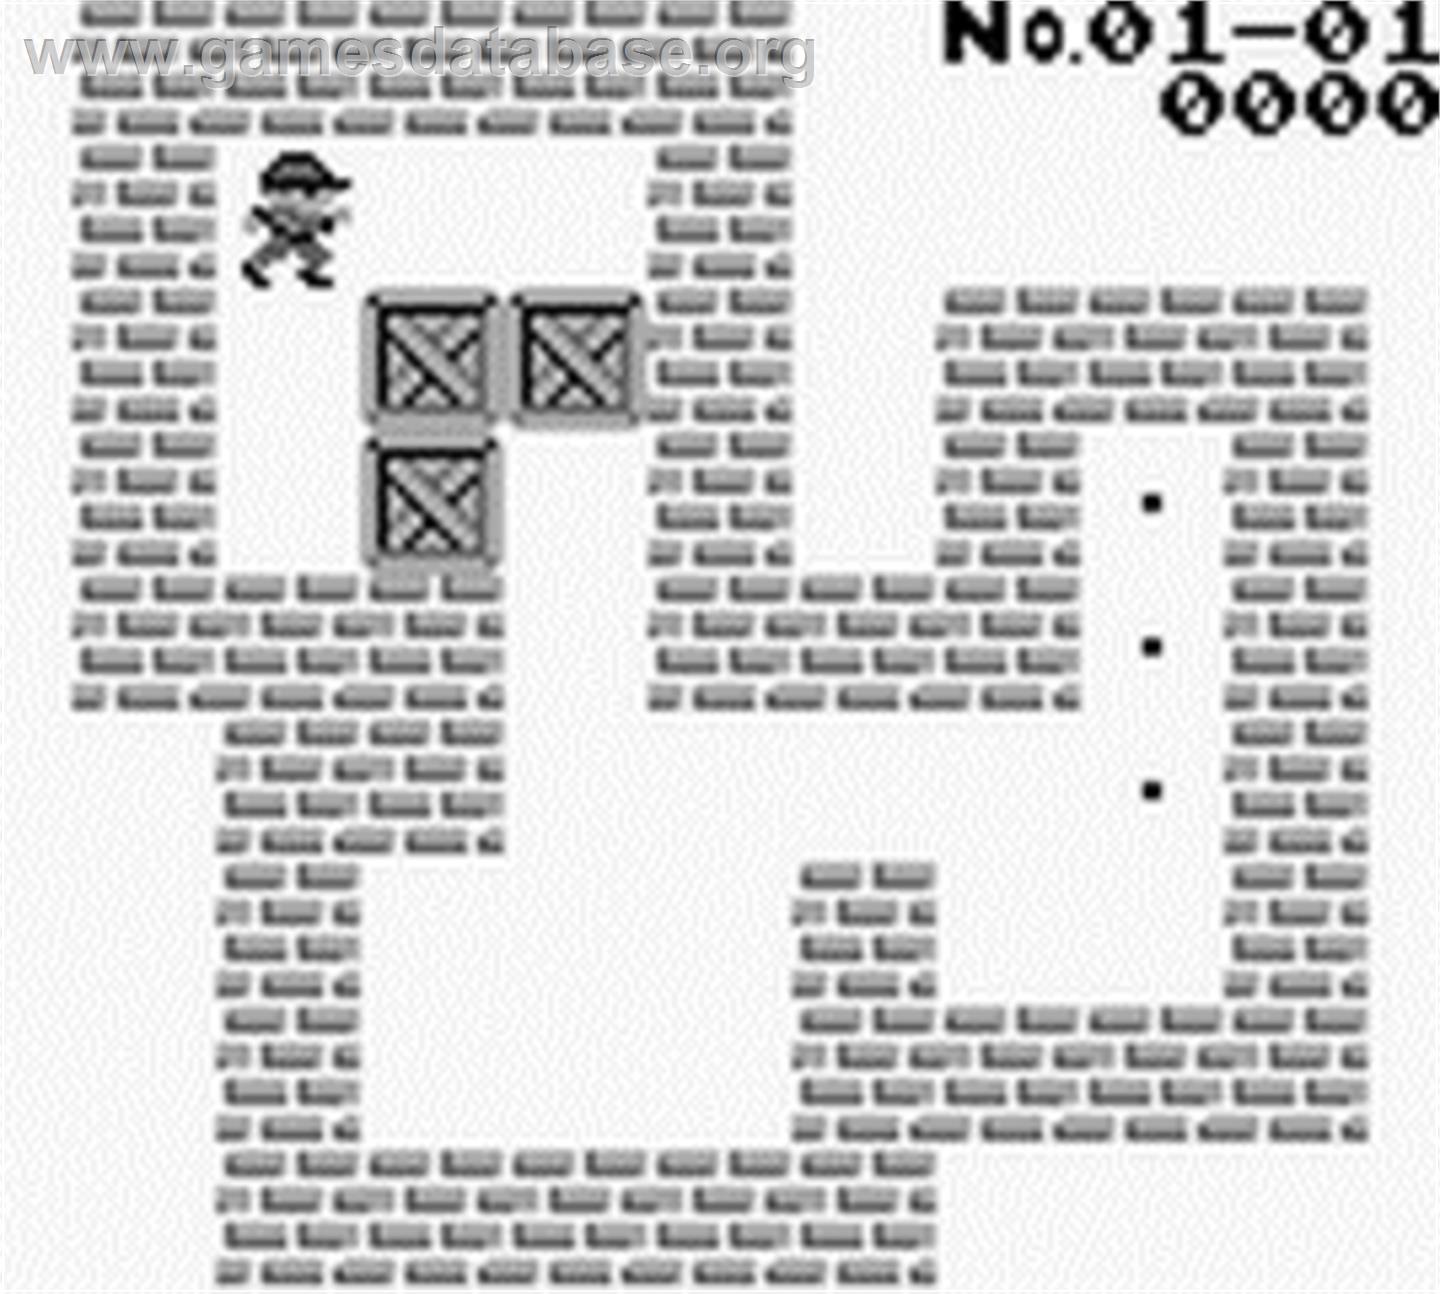 Boxxle - Nintendo Game Boy - Artwork - In Game